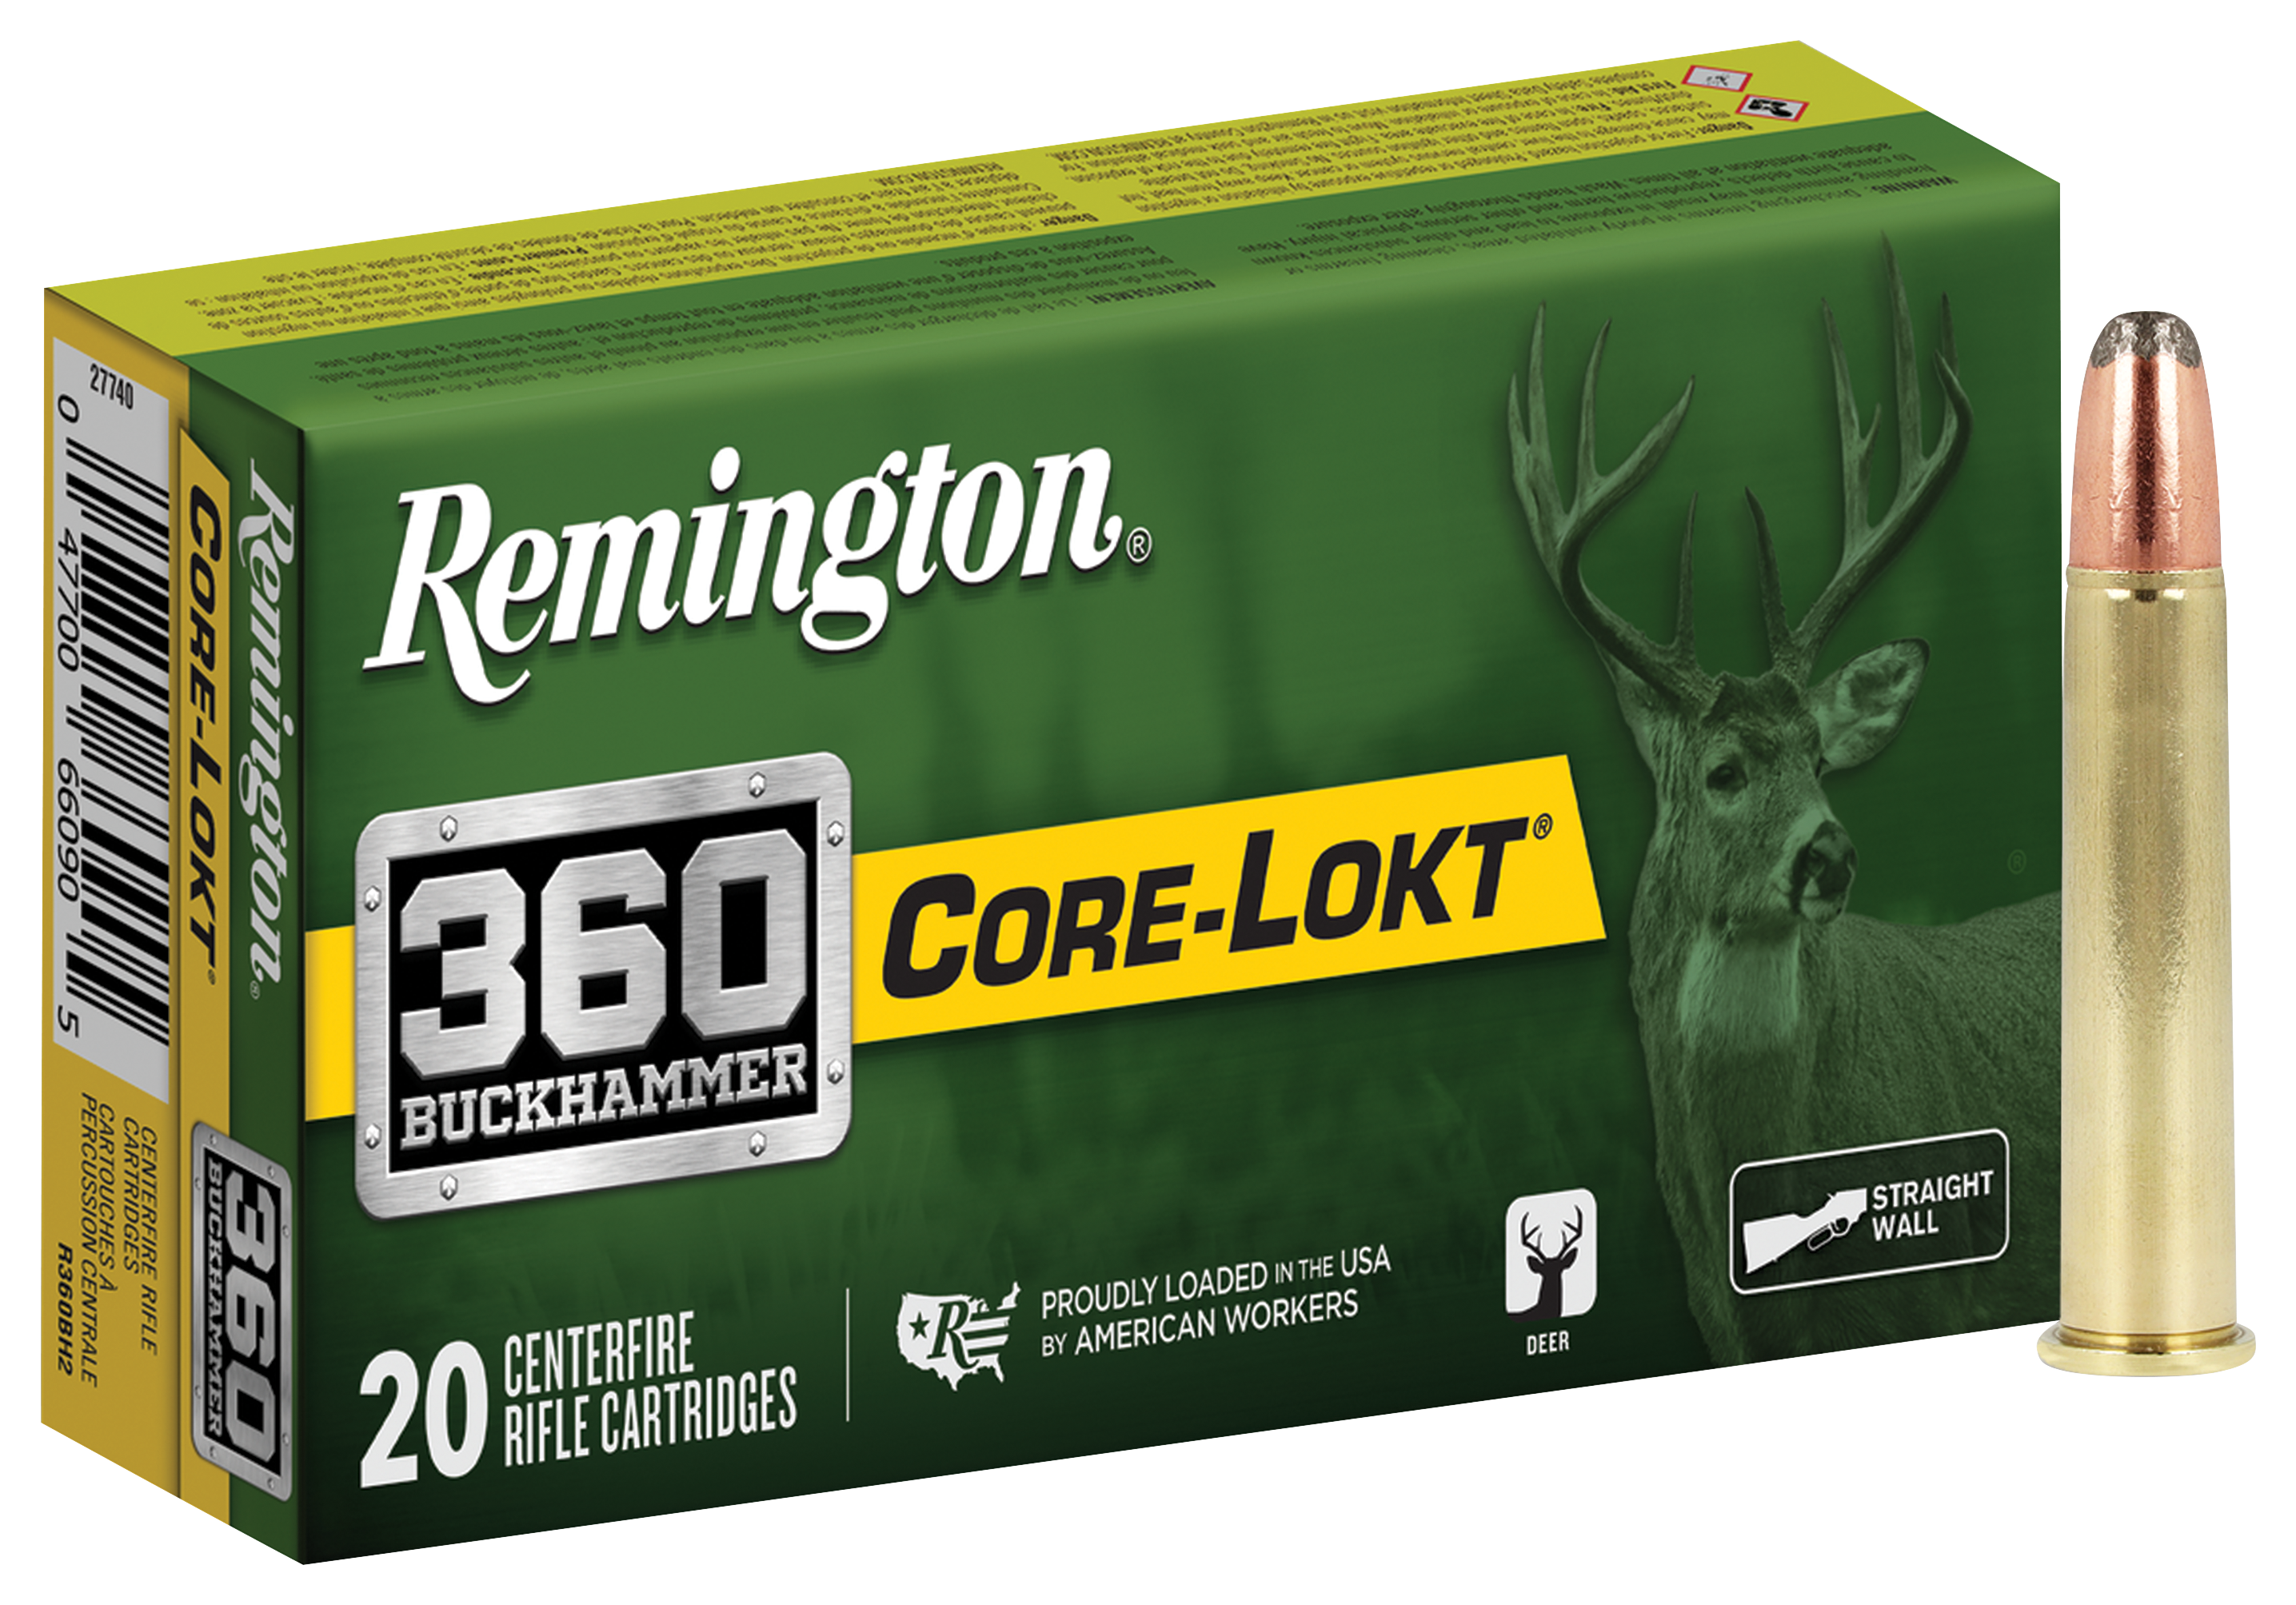 Remington Core-Lokt .360 Buckhammer 200 Grain Centerfire Rifle Ammo